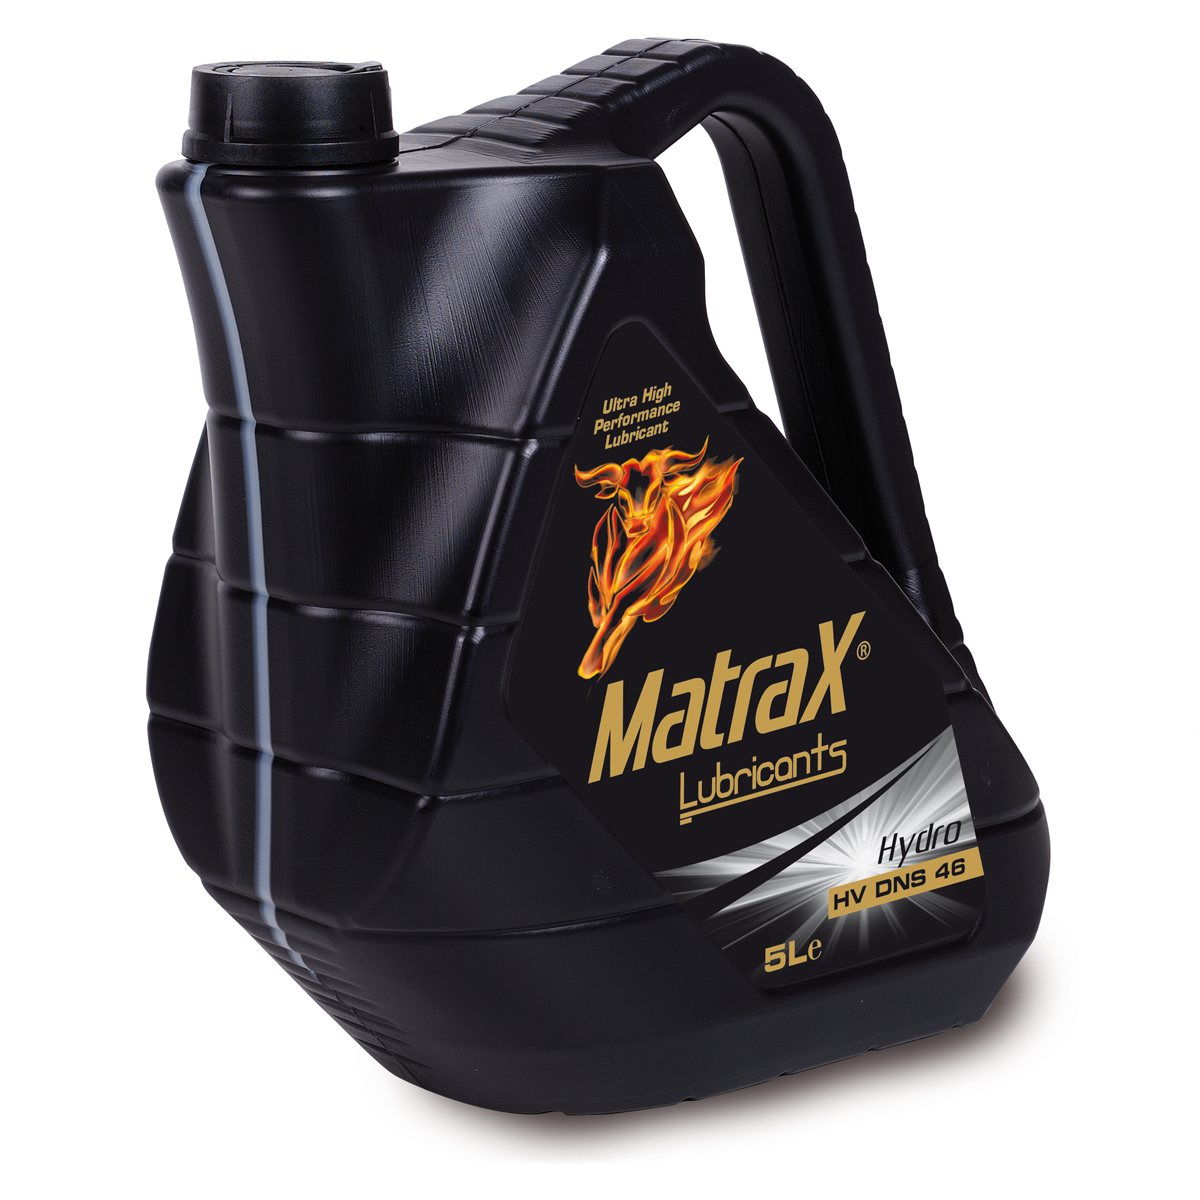 matrax-lubricants-hydro-hv-dns-46-5l